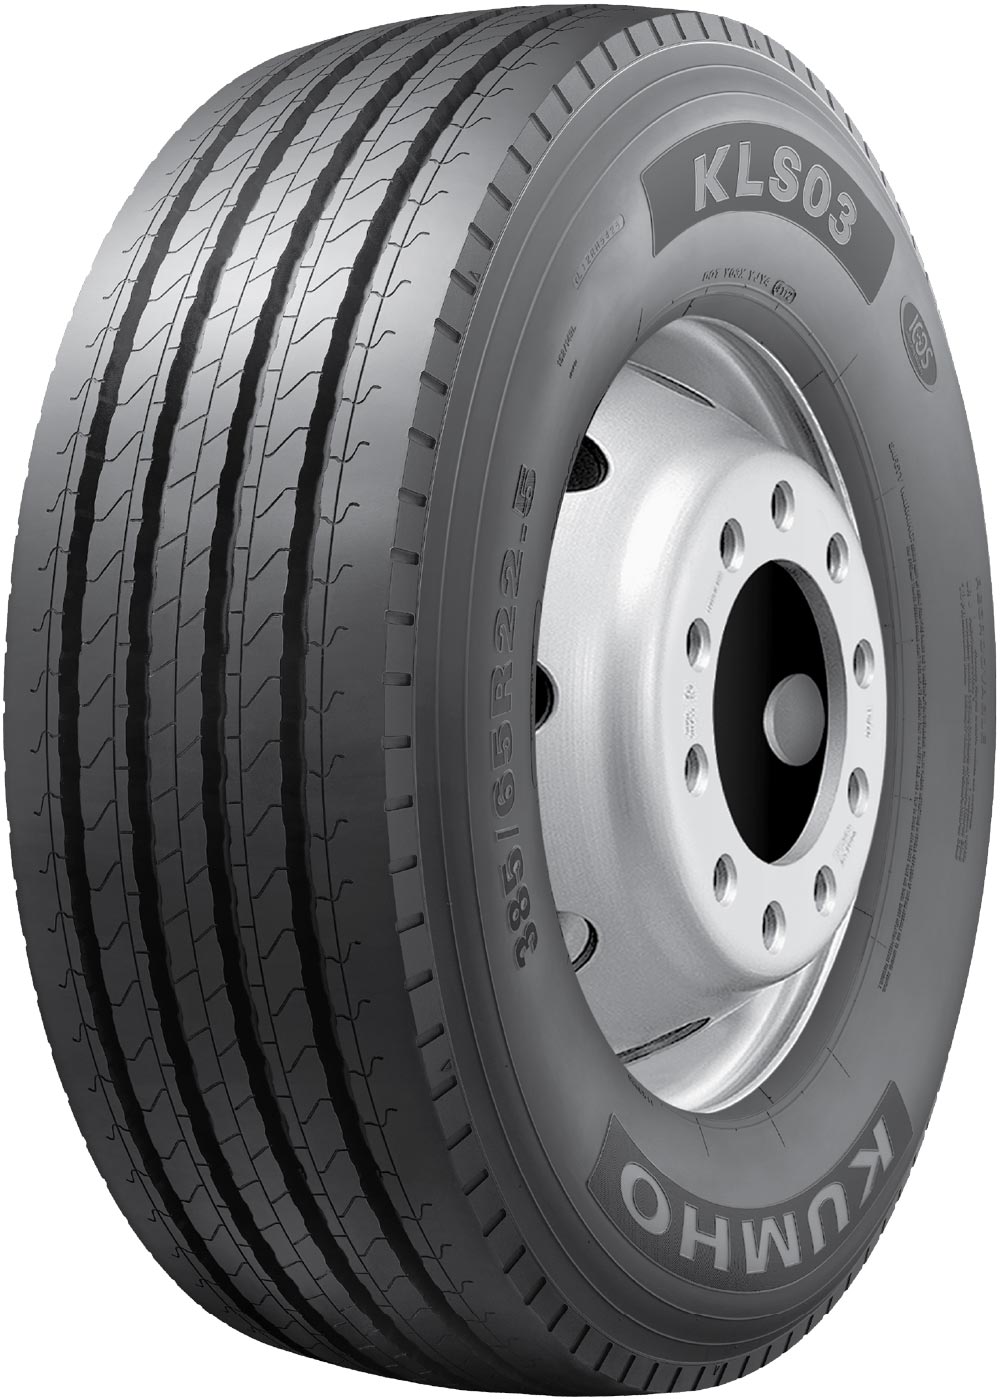 product_type-heavy_tires KUMHO KLS03 24PR 385/65 R22.5 K